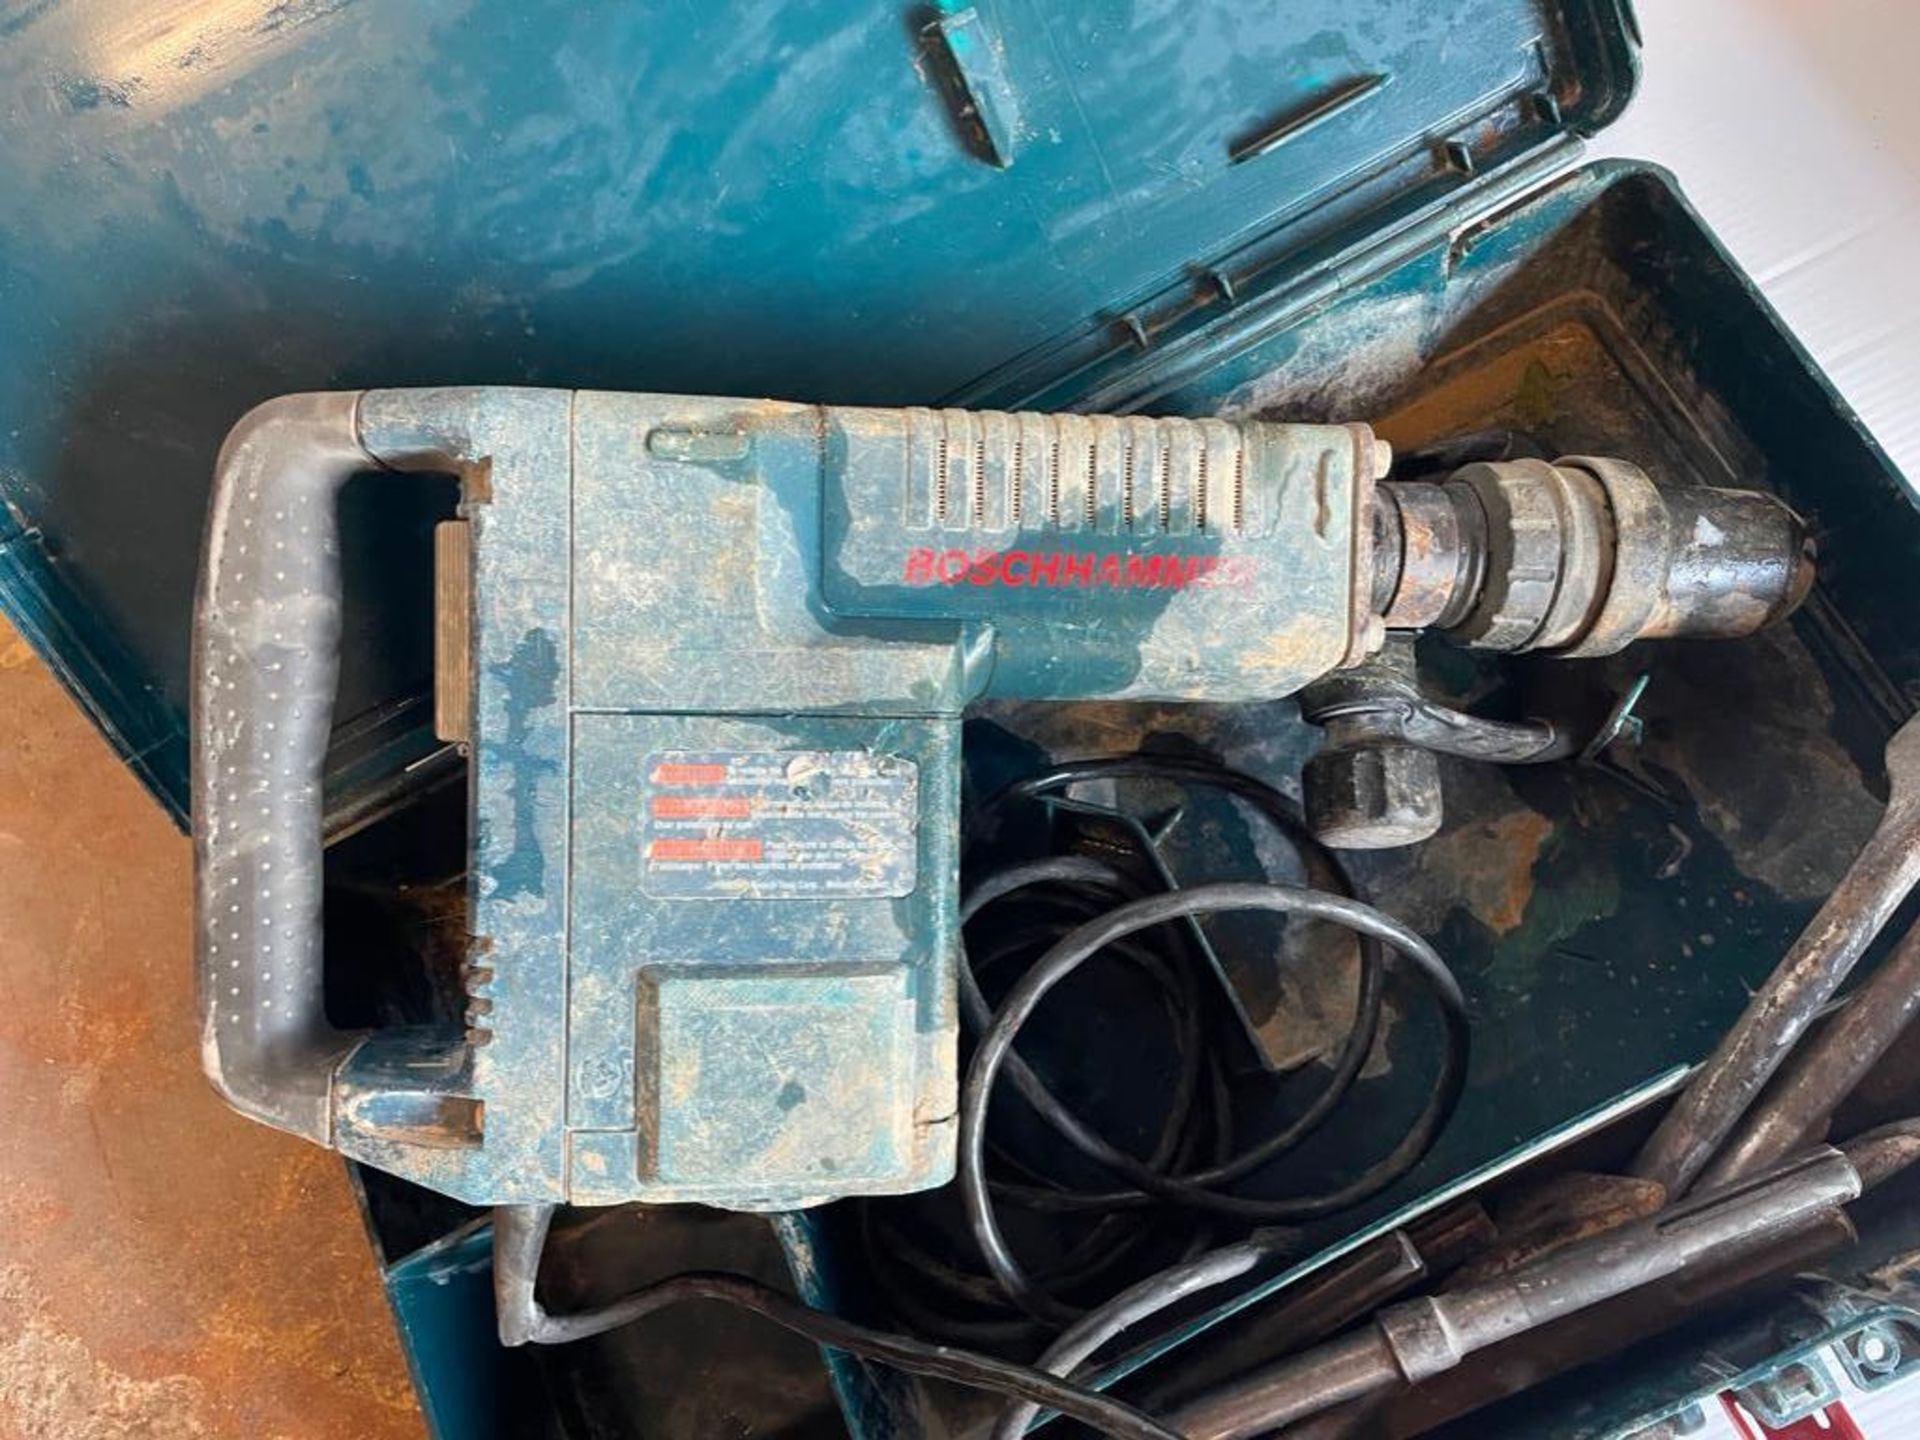 Bosch 11316EVS SDS Max Demolition Hammer, 120V in Case. Located in Hazelwood, MO - Image 4 of 5